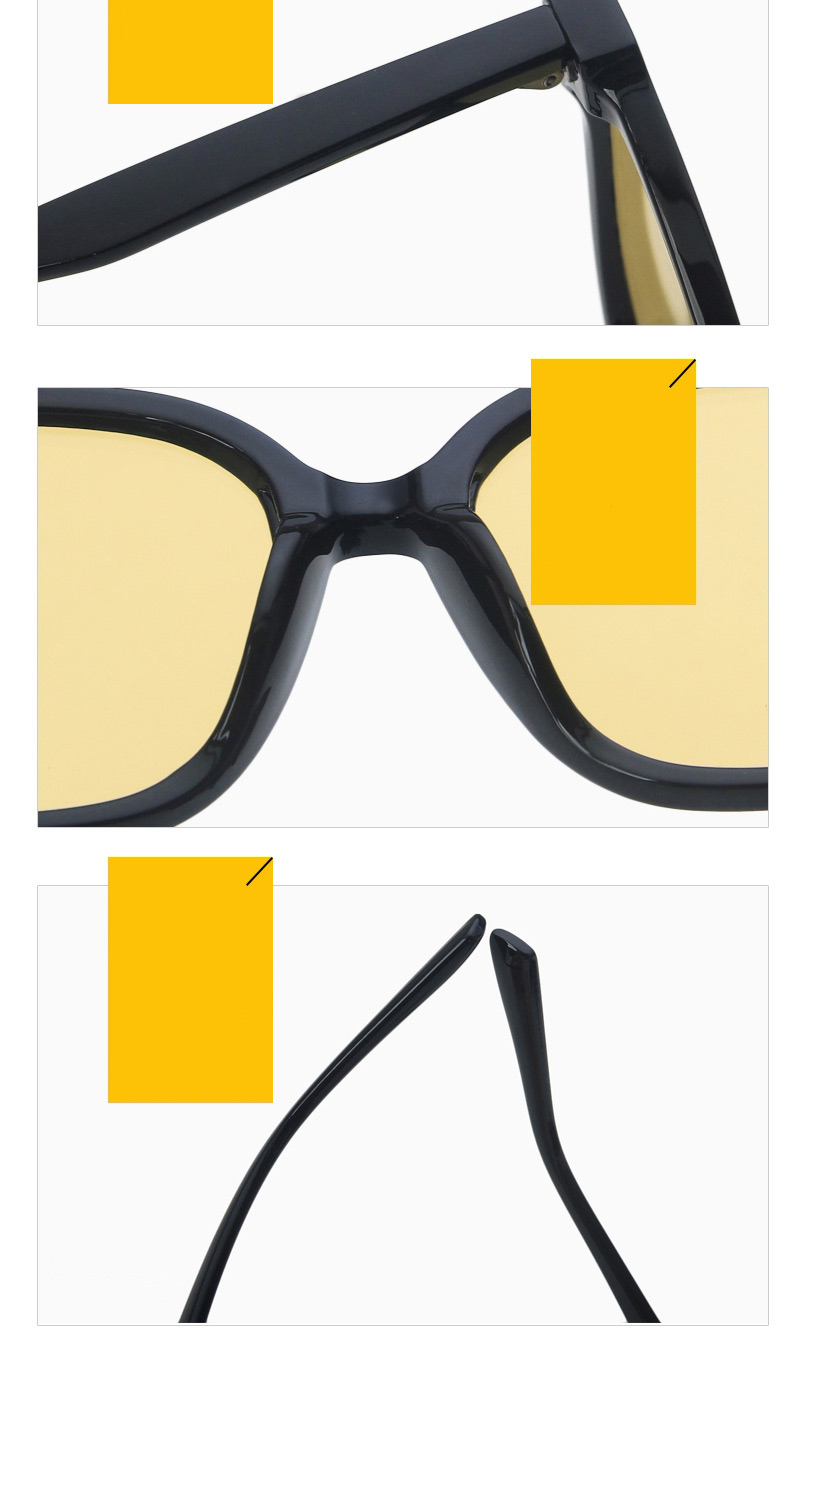 Fashion Transparent Gray Gray Flakes Square Rice Nail Sunglasses,Women Sunglasses